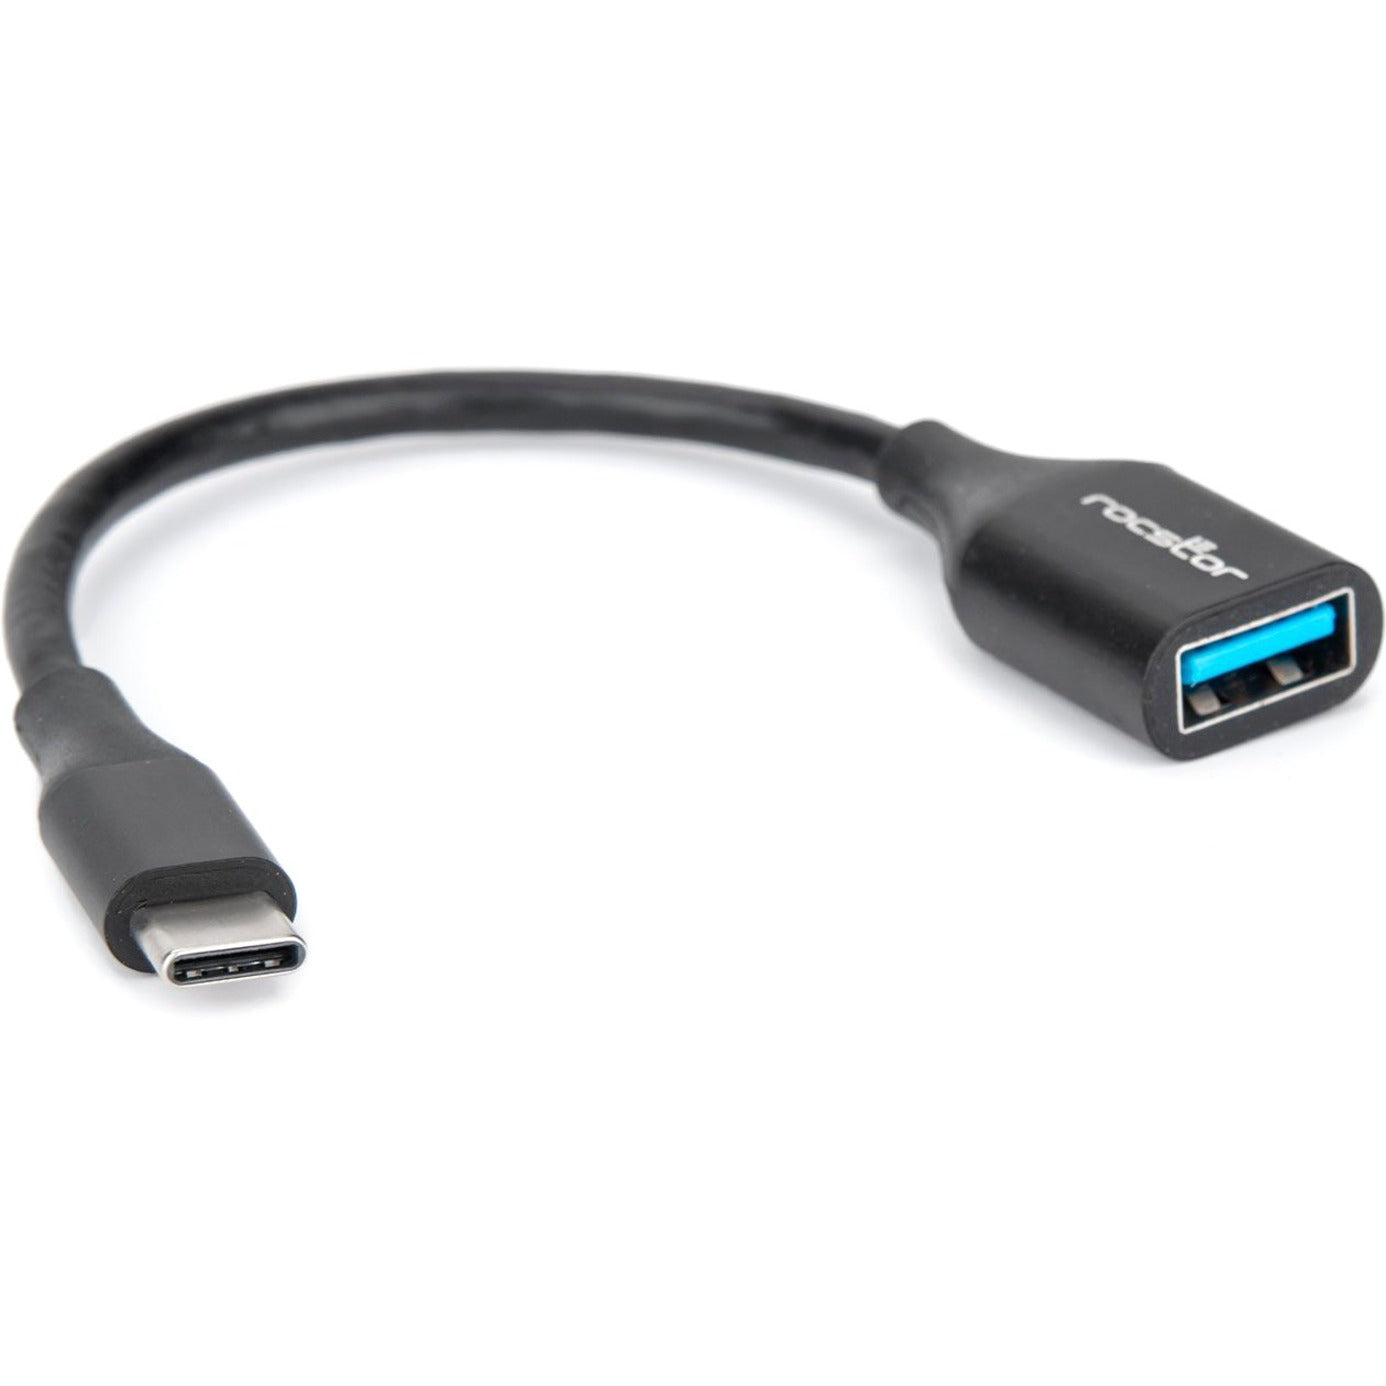 Rocstor Y10C147-B1 Premium USB Data Transfer Adapter, USB-C to USB-A Adapter M/F